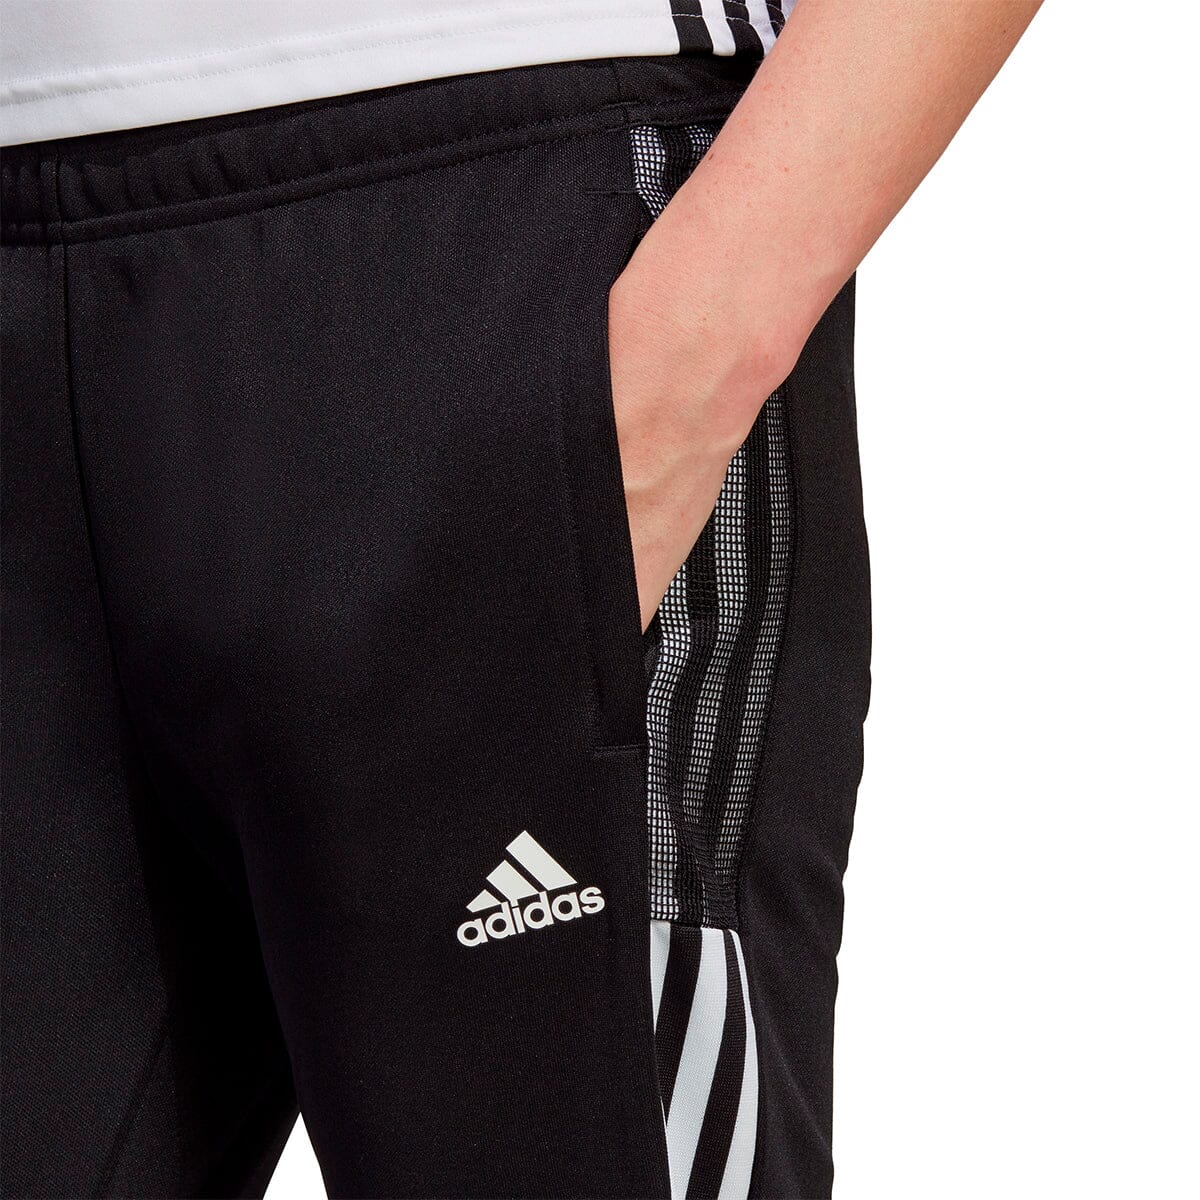 Adidas Tiro TK Women's Track Pants Black/Grey Tapered Joggers Sz